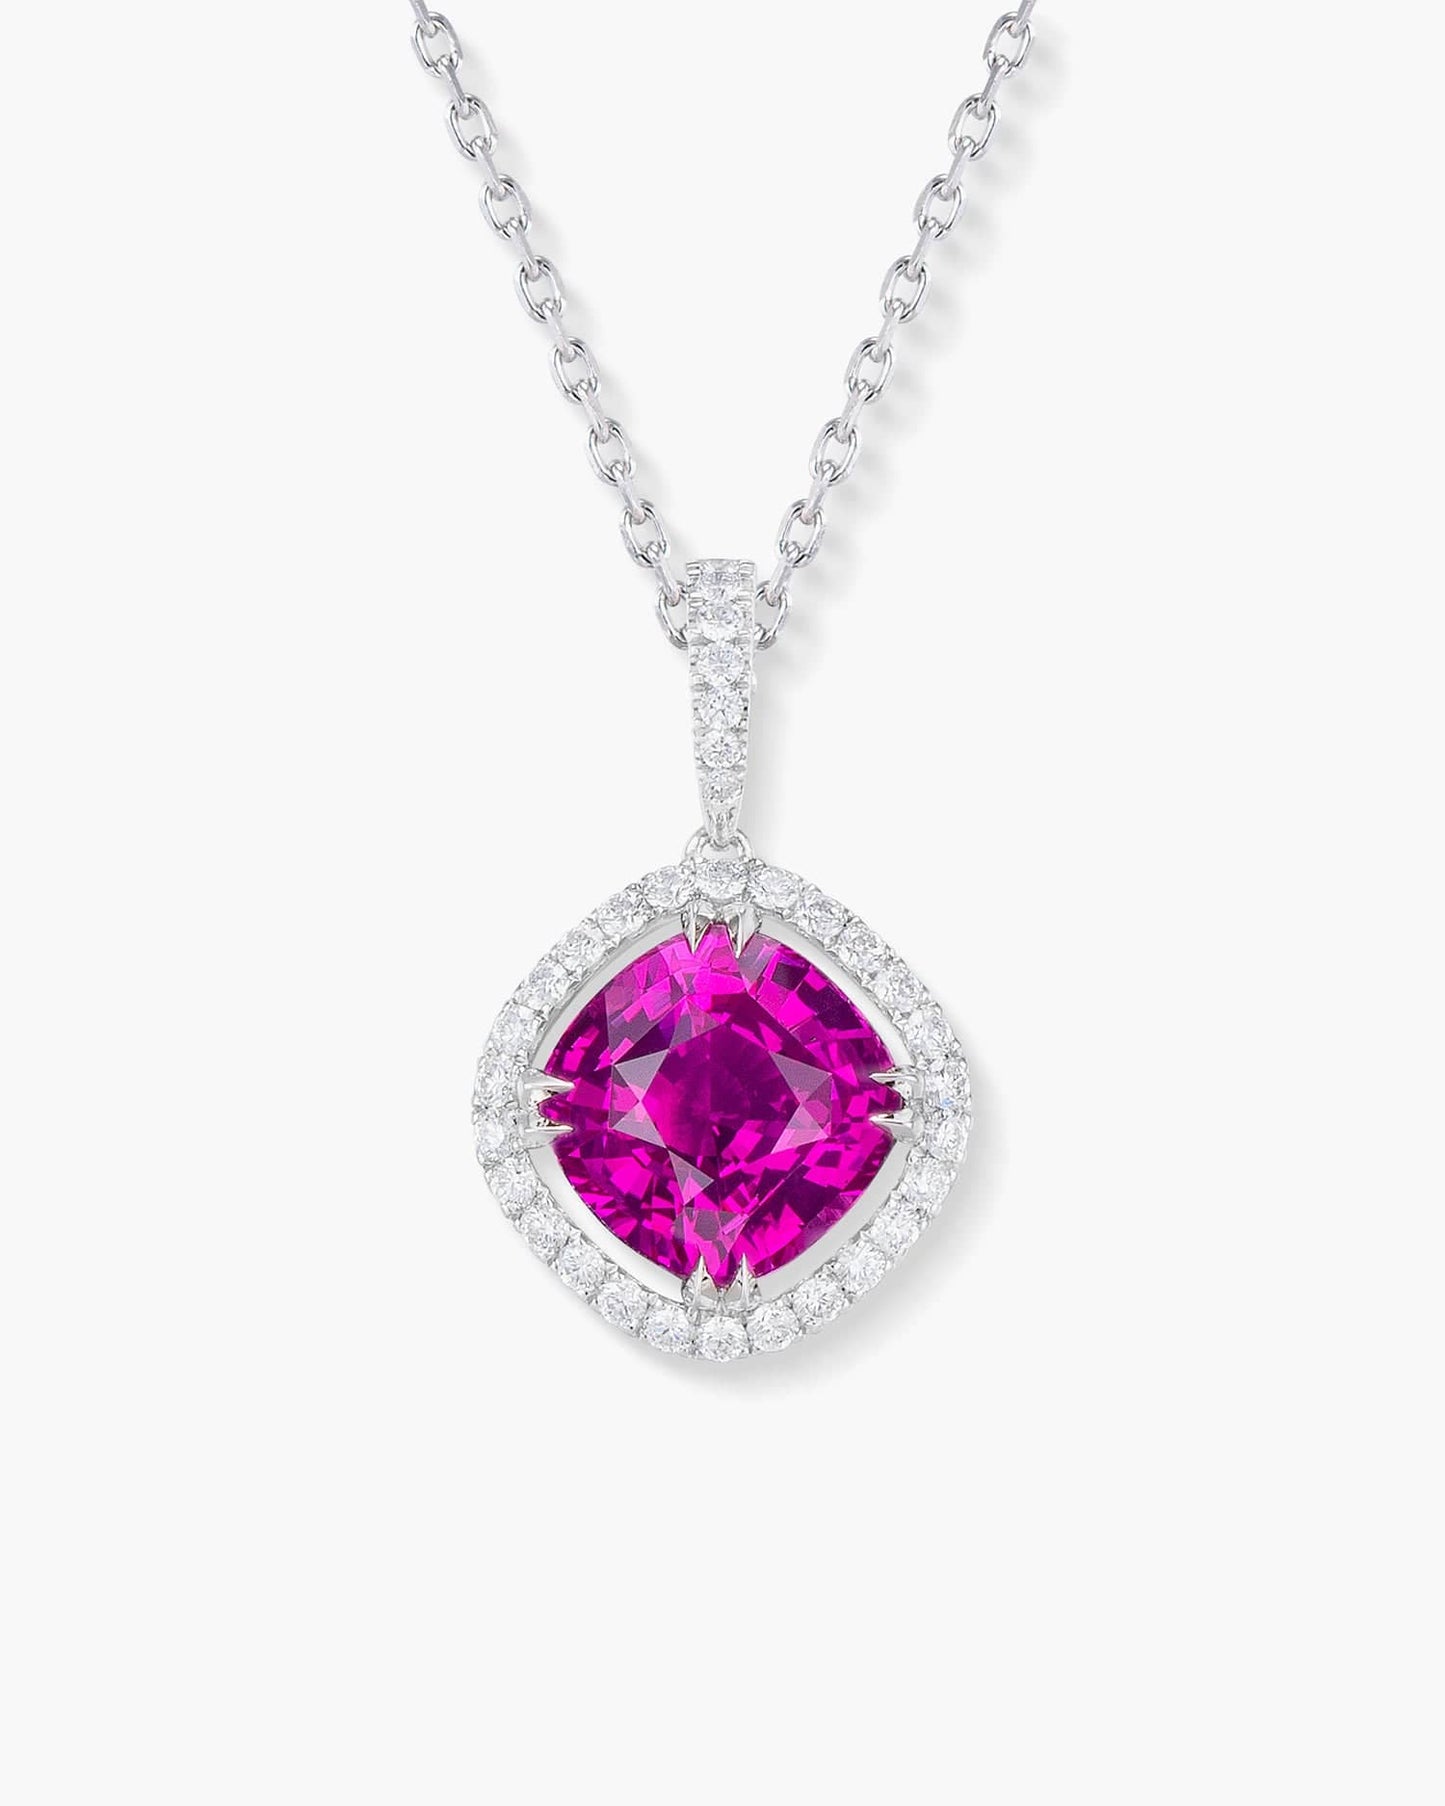 3.05 carat Cushion Cut Ceylon Pink Sapphire and Diamond Pendant Necklace